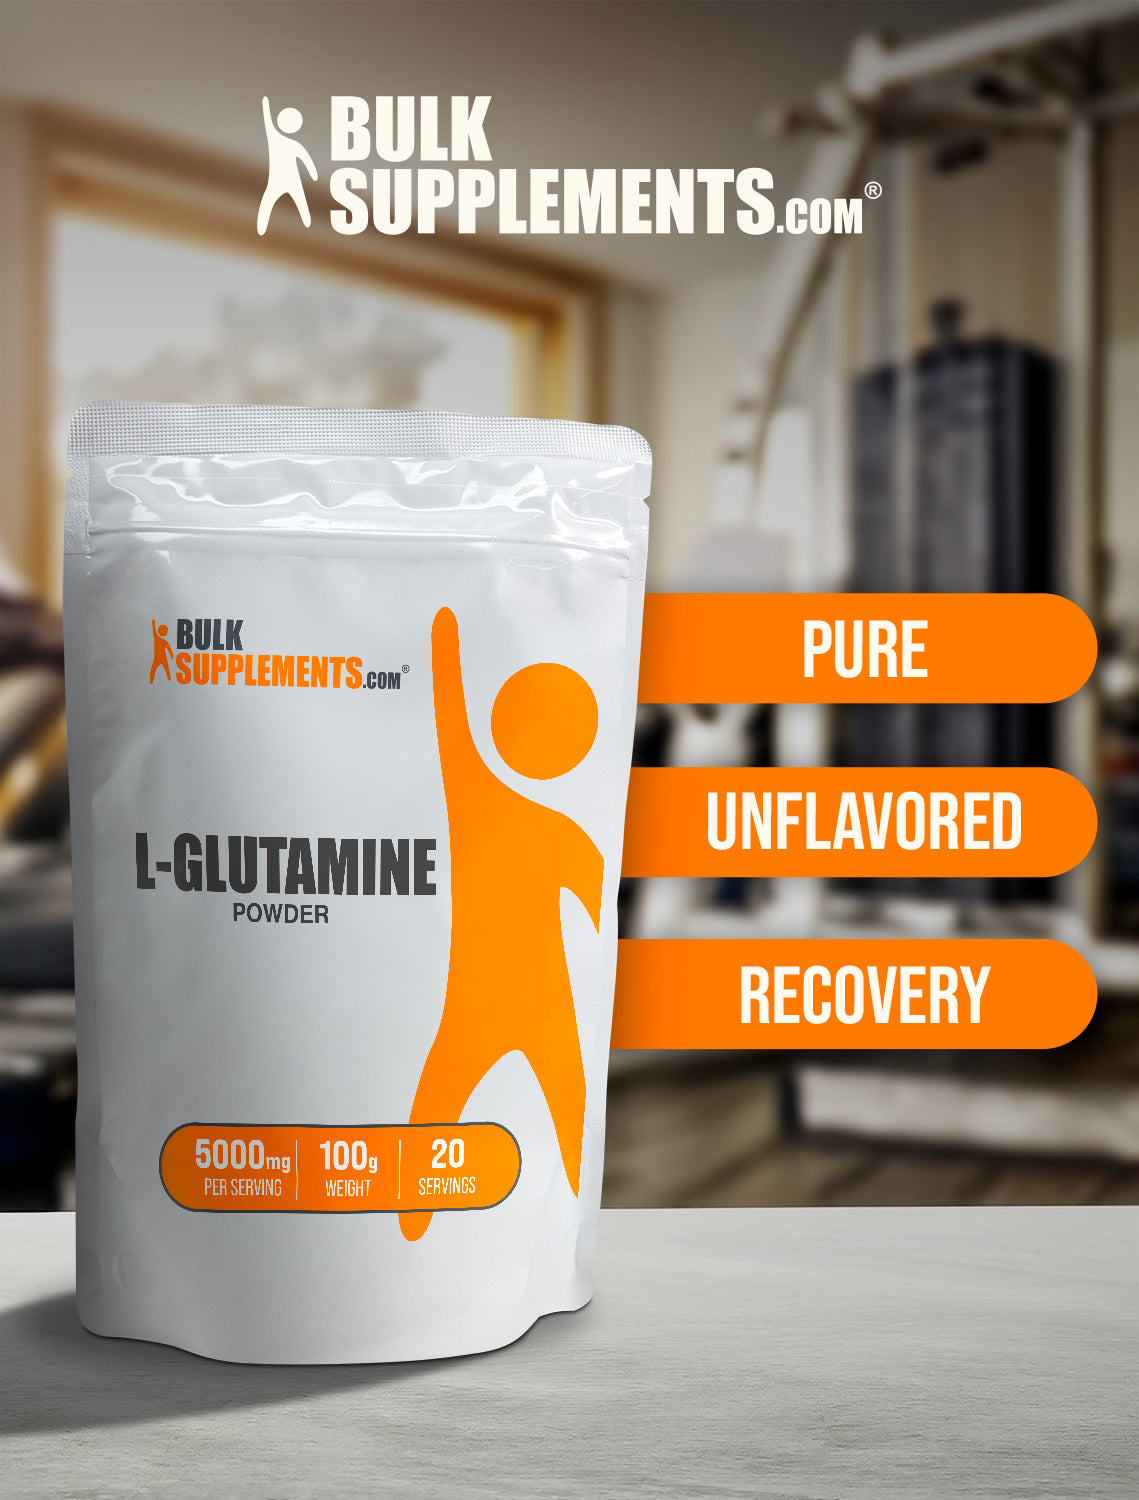 L-glutamine powder 100g keywords image